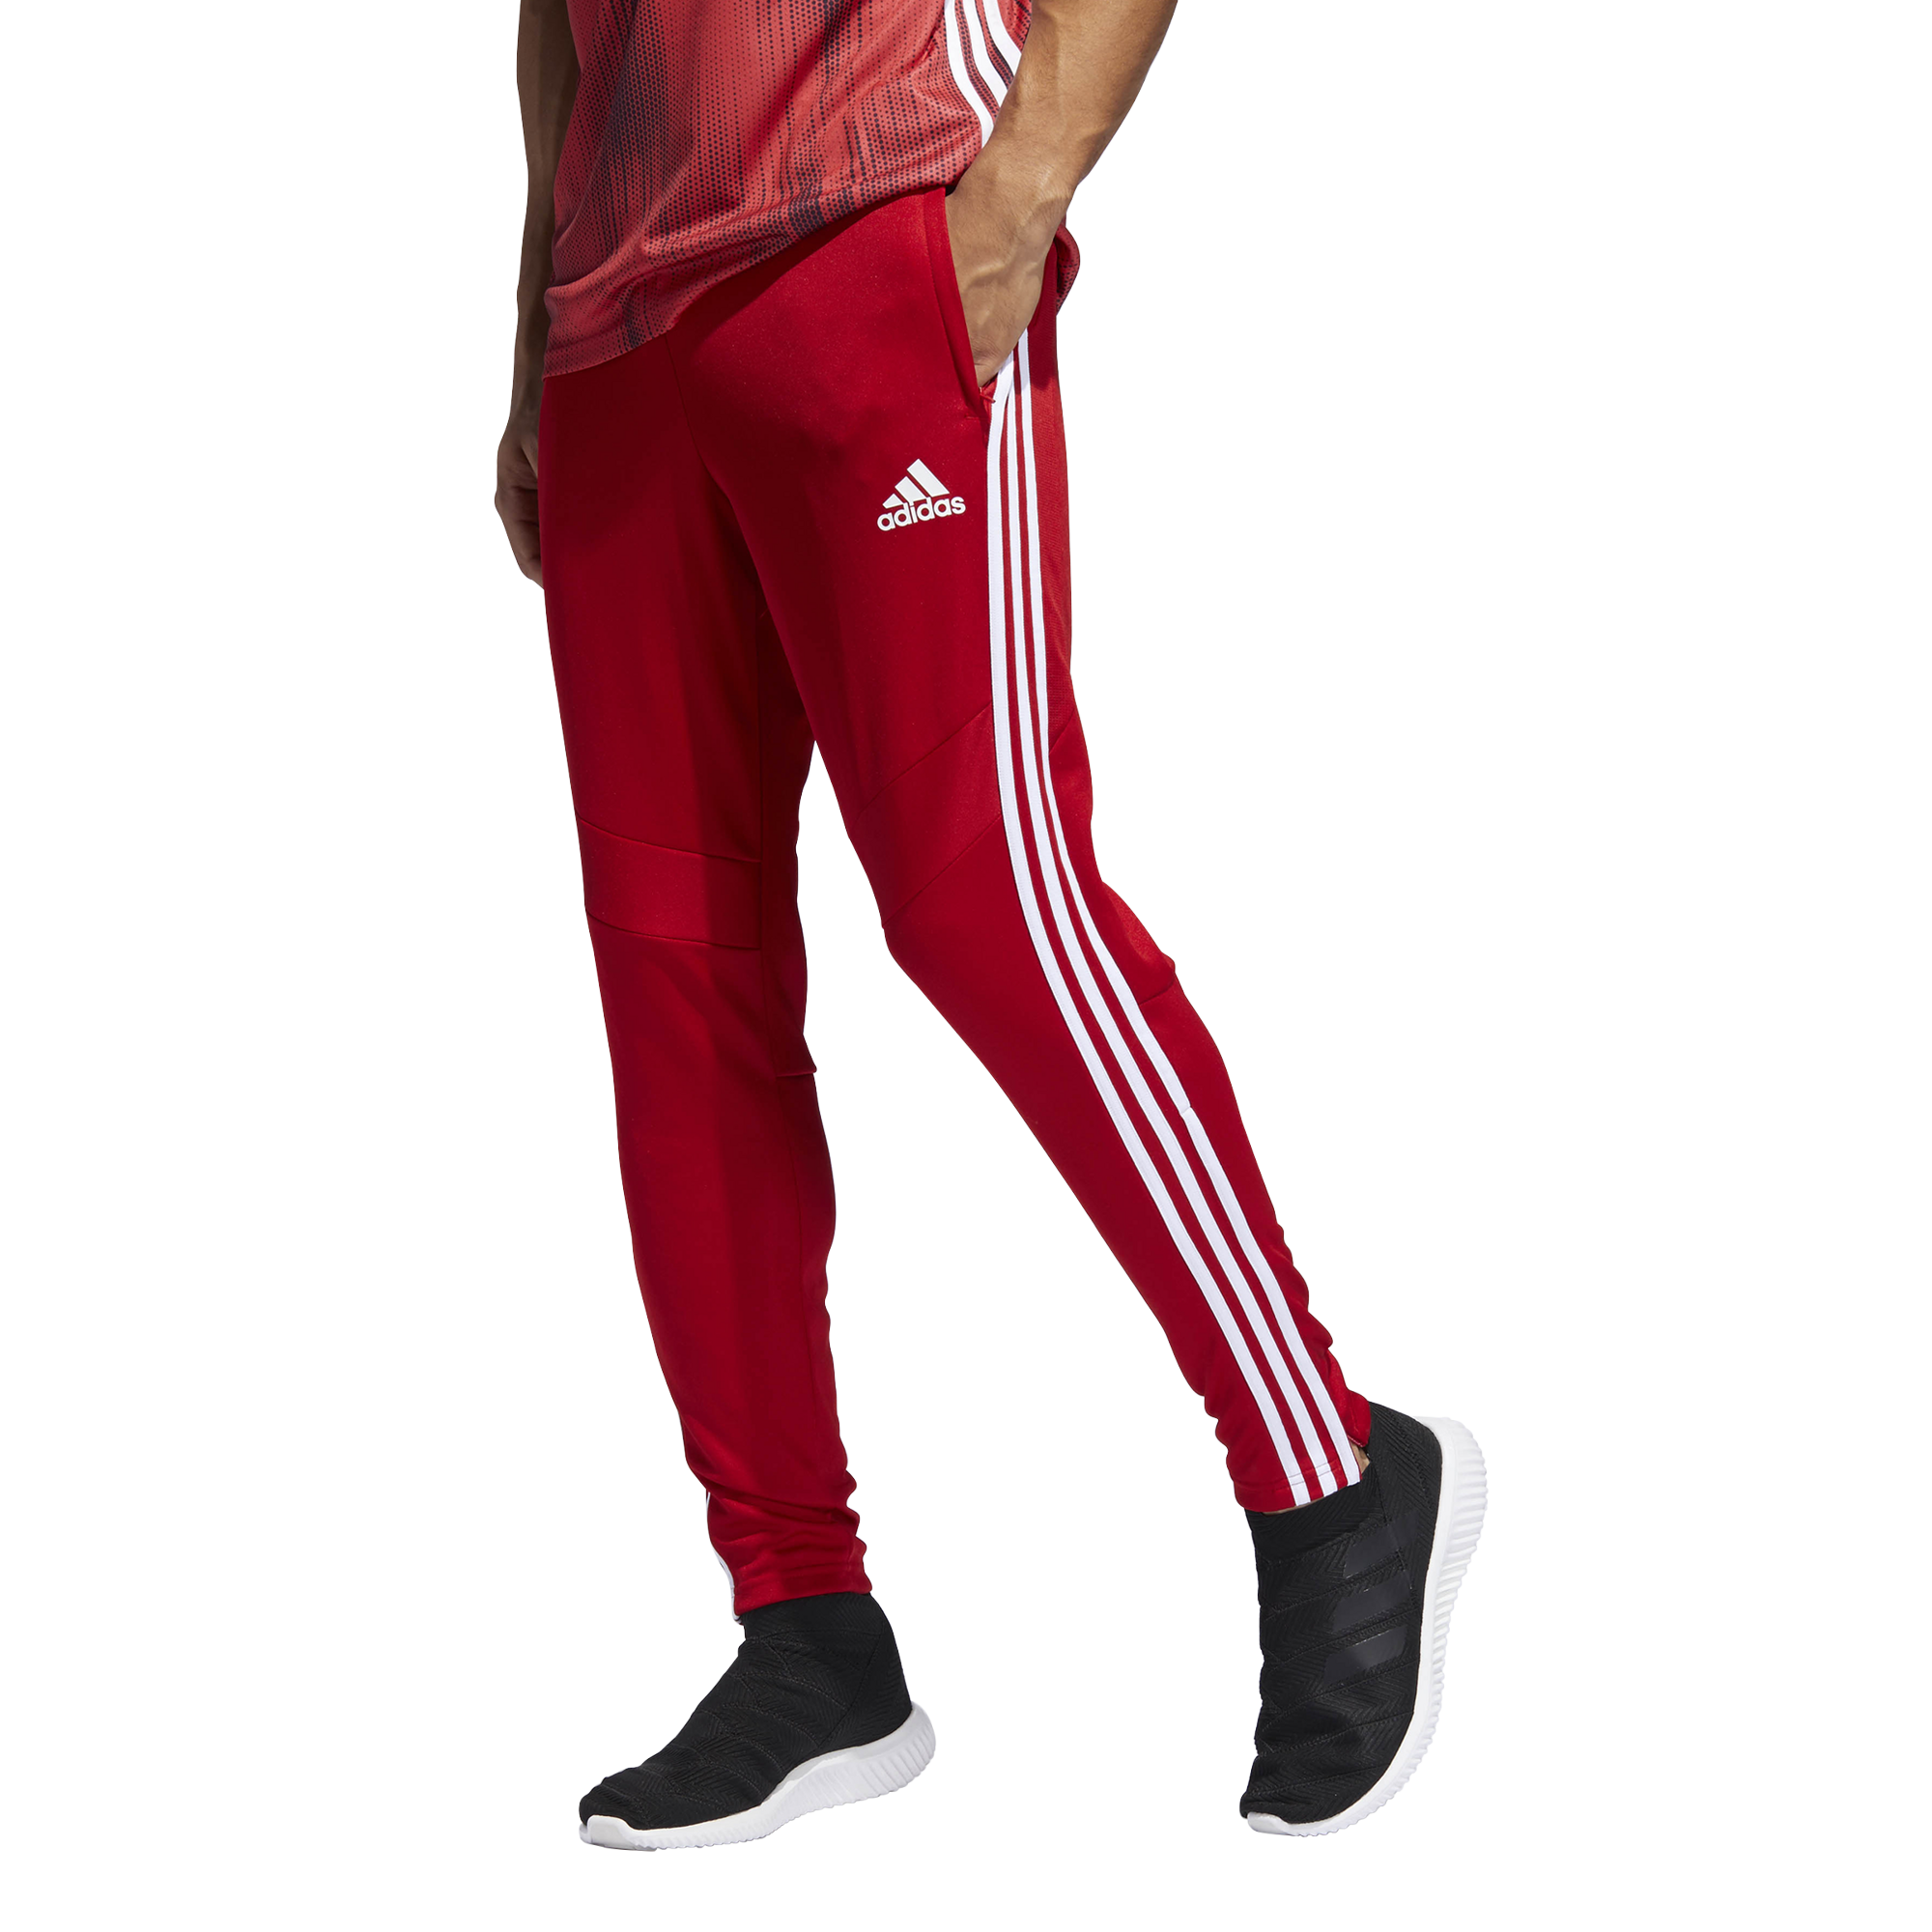 men's red adidas sweatpants